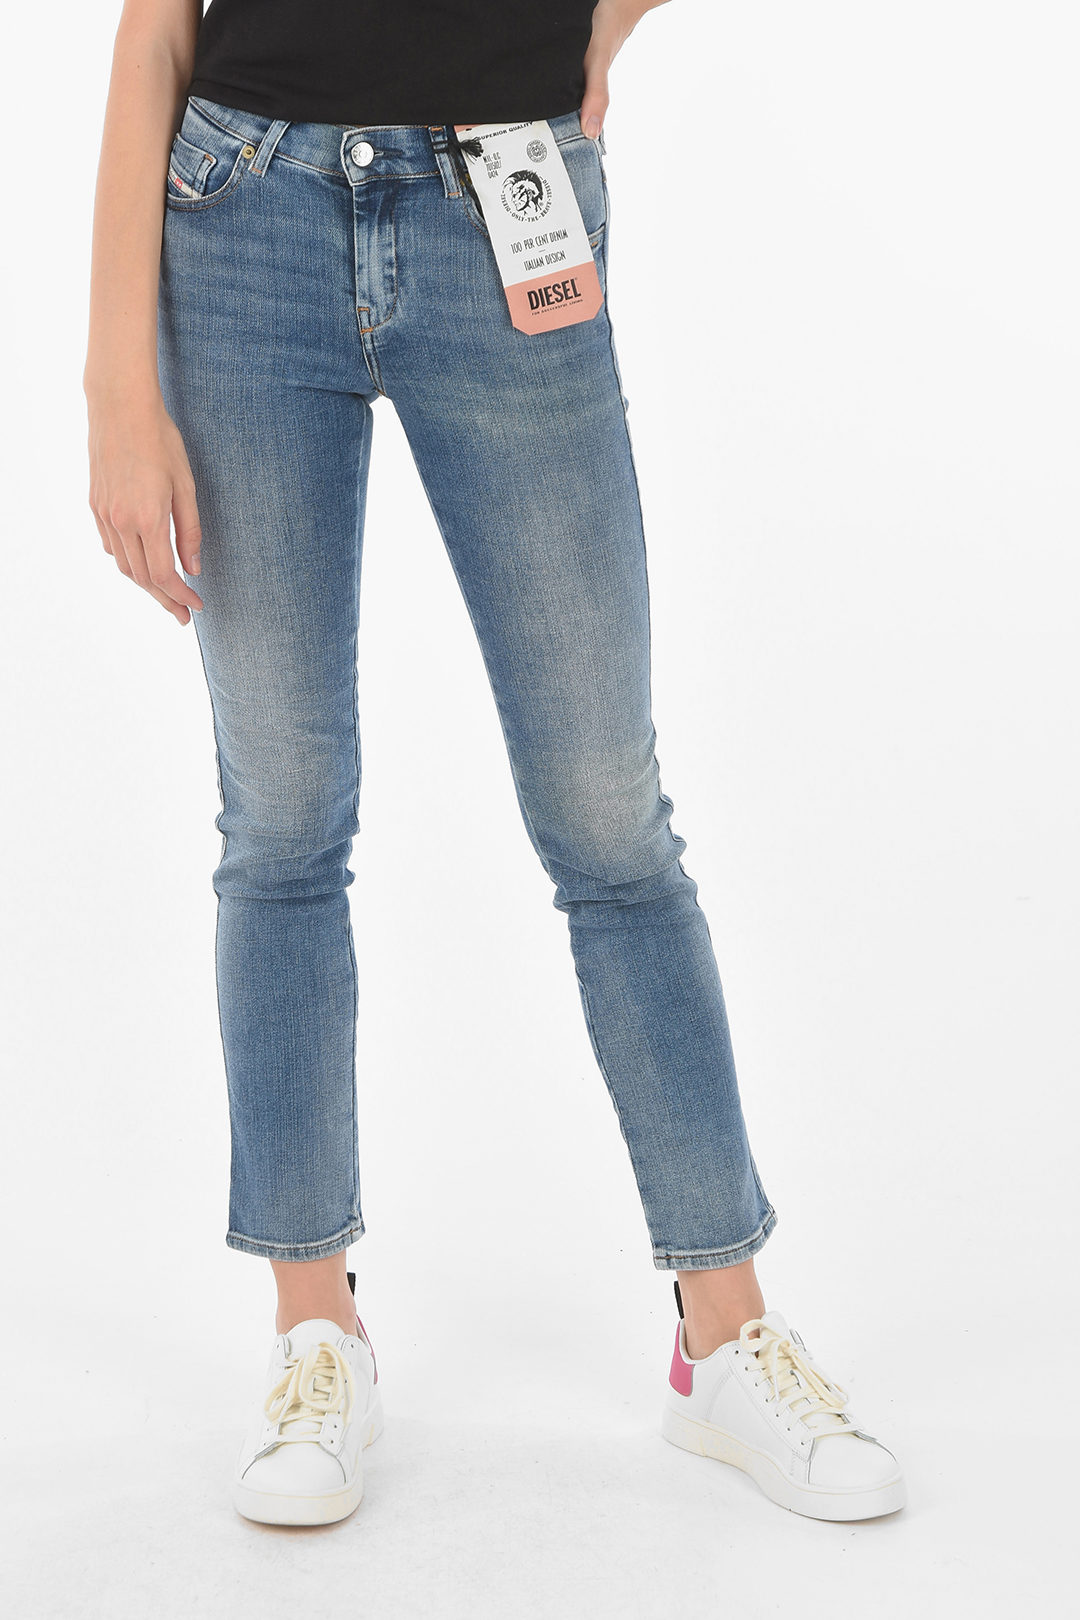 Diesel regular waist SANDY straight fit jeans - Glamood Outlet